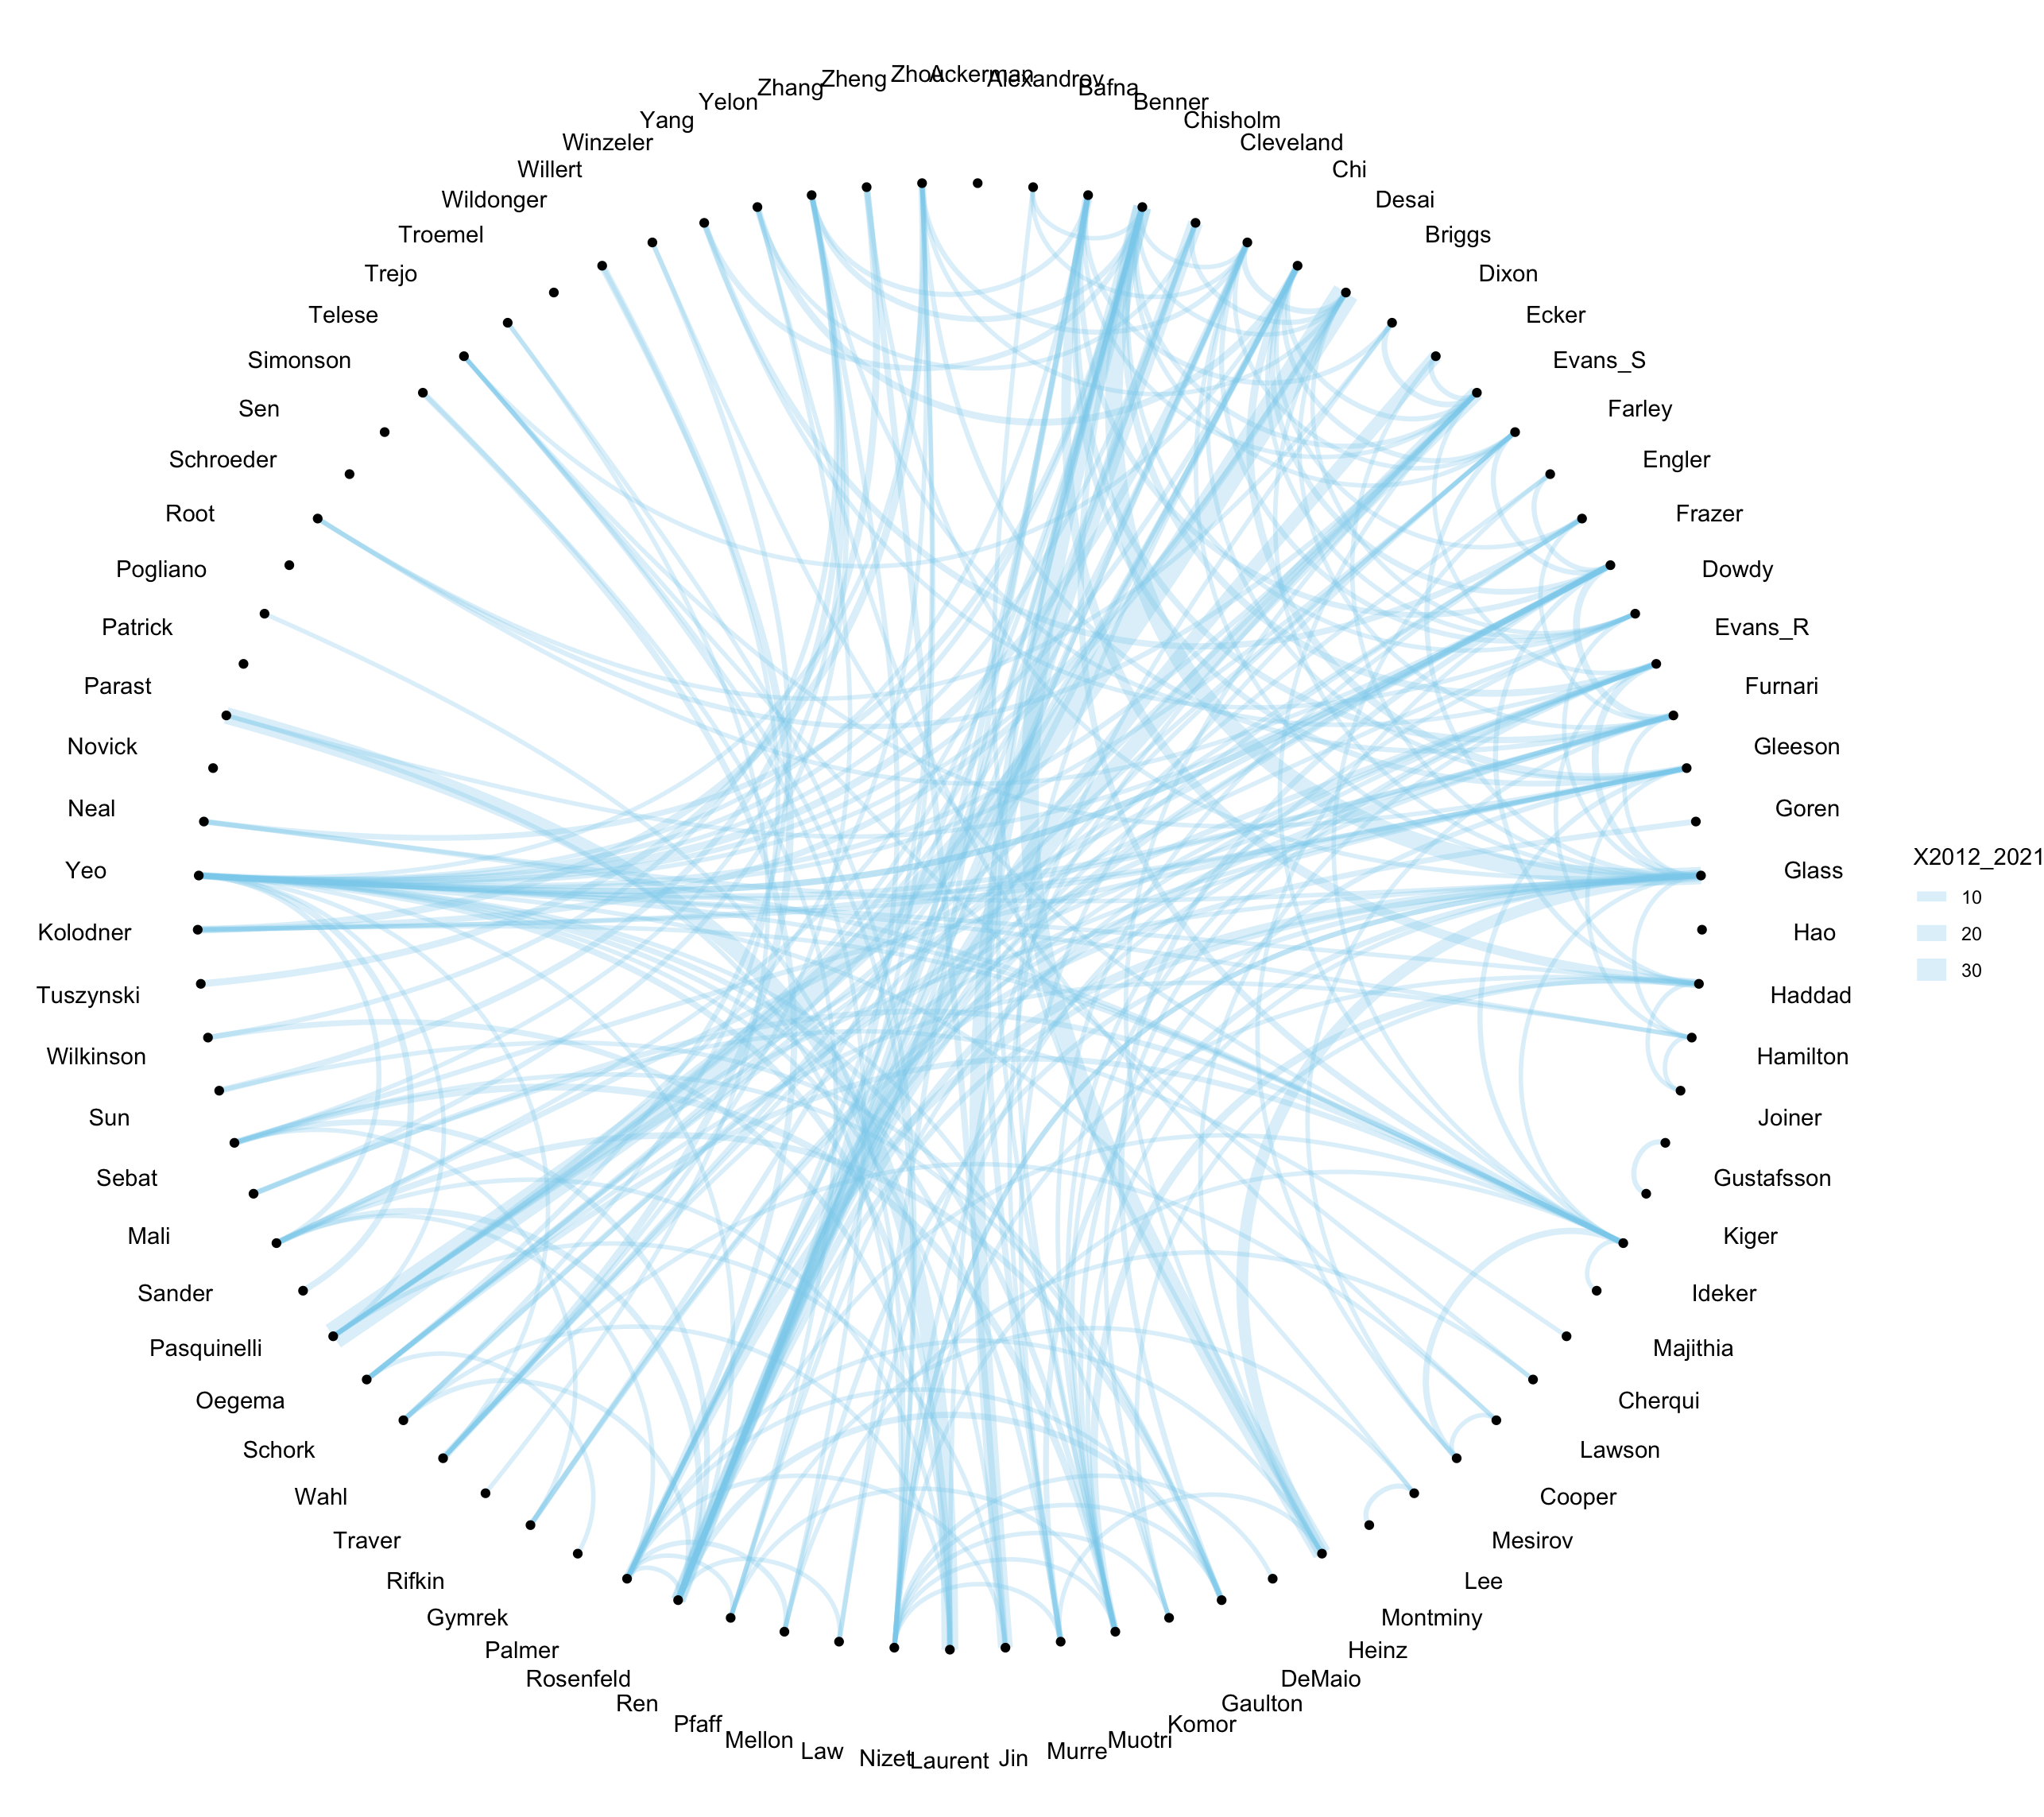 Circo plot shows highly collaborative co-publication network among program faculty